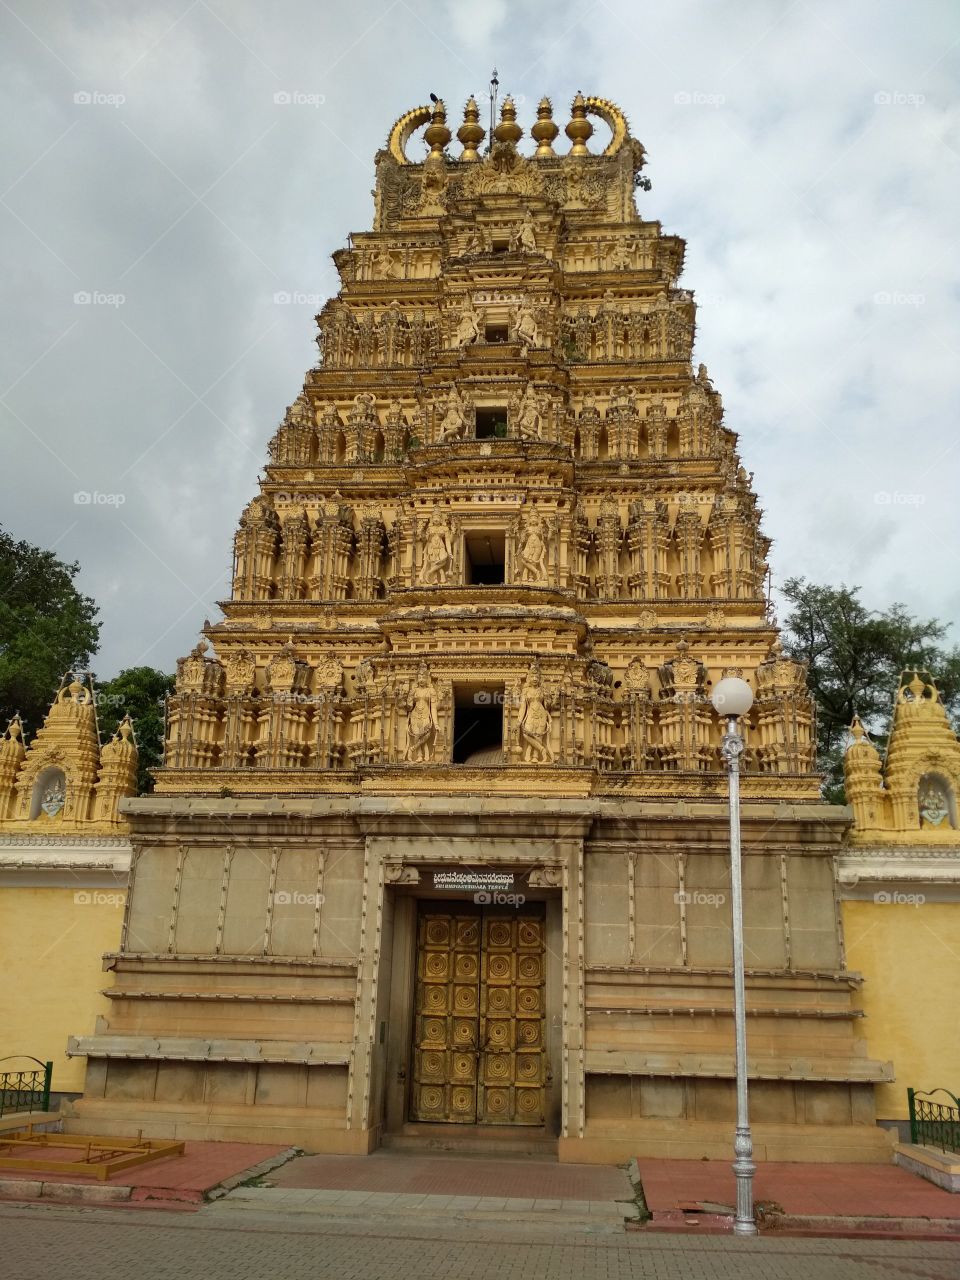 Kannada architecture